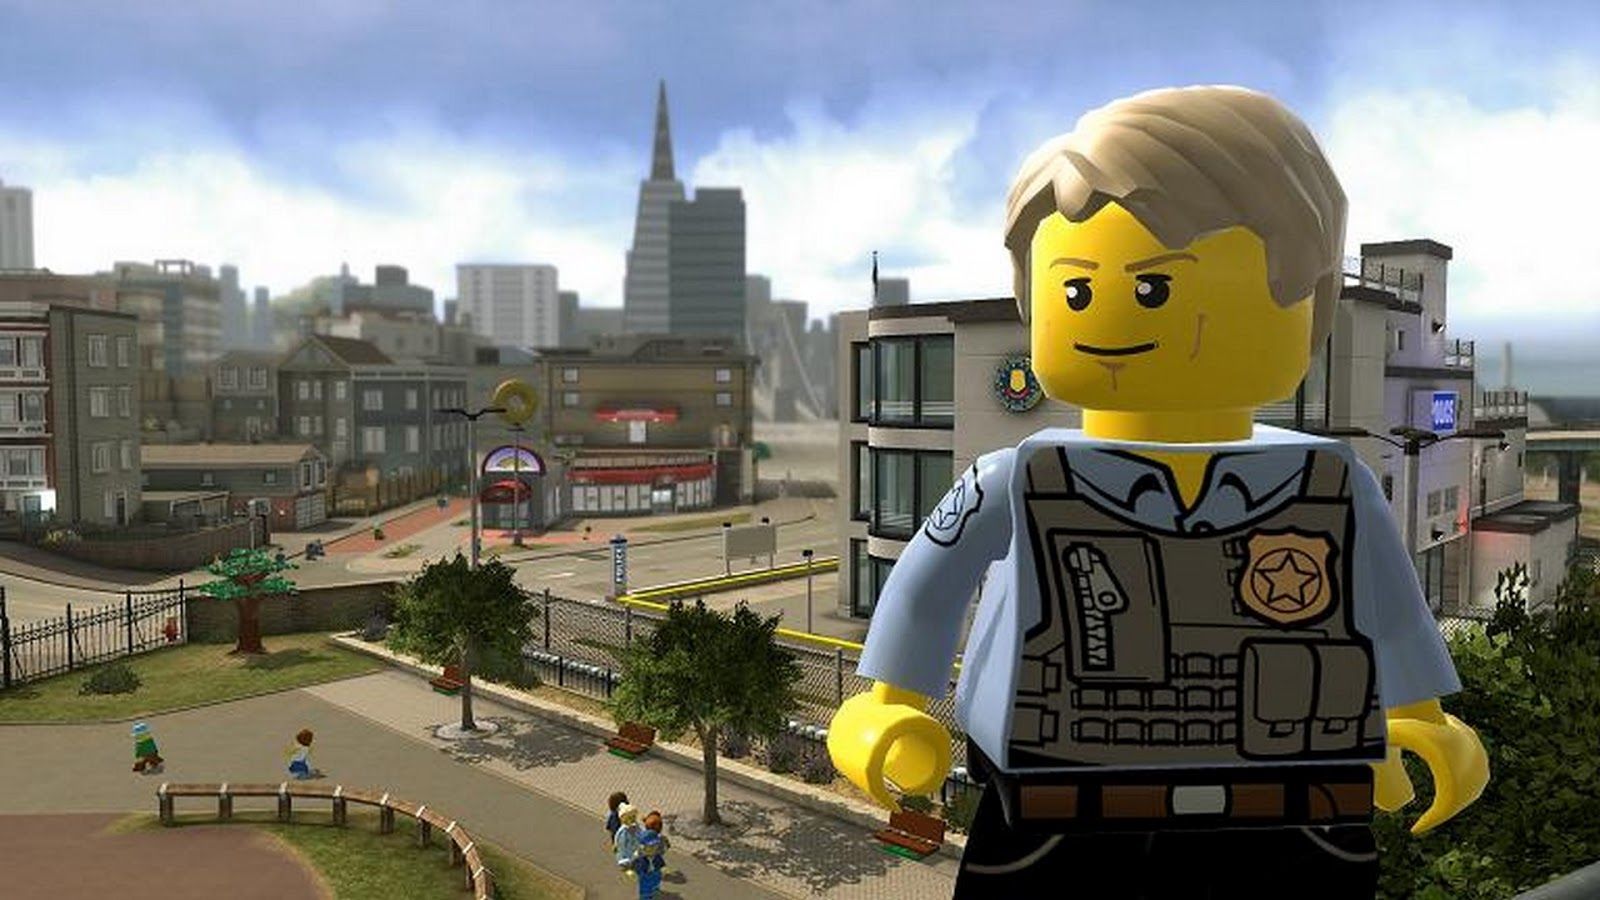 LEGO City Undercover Wallpaper